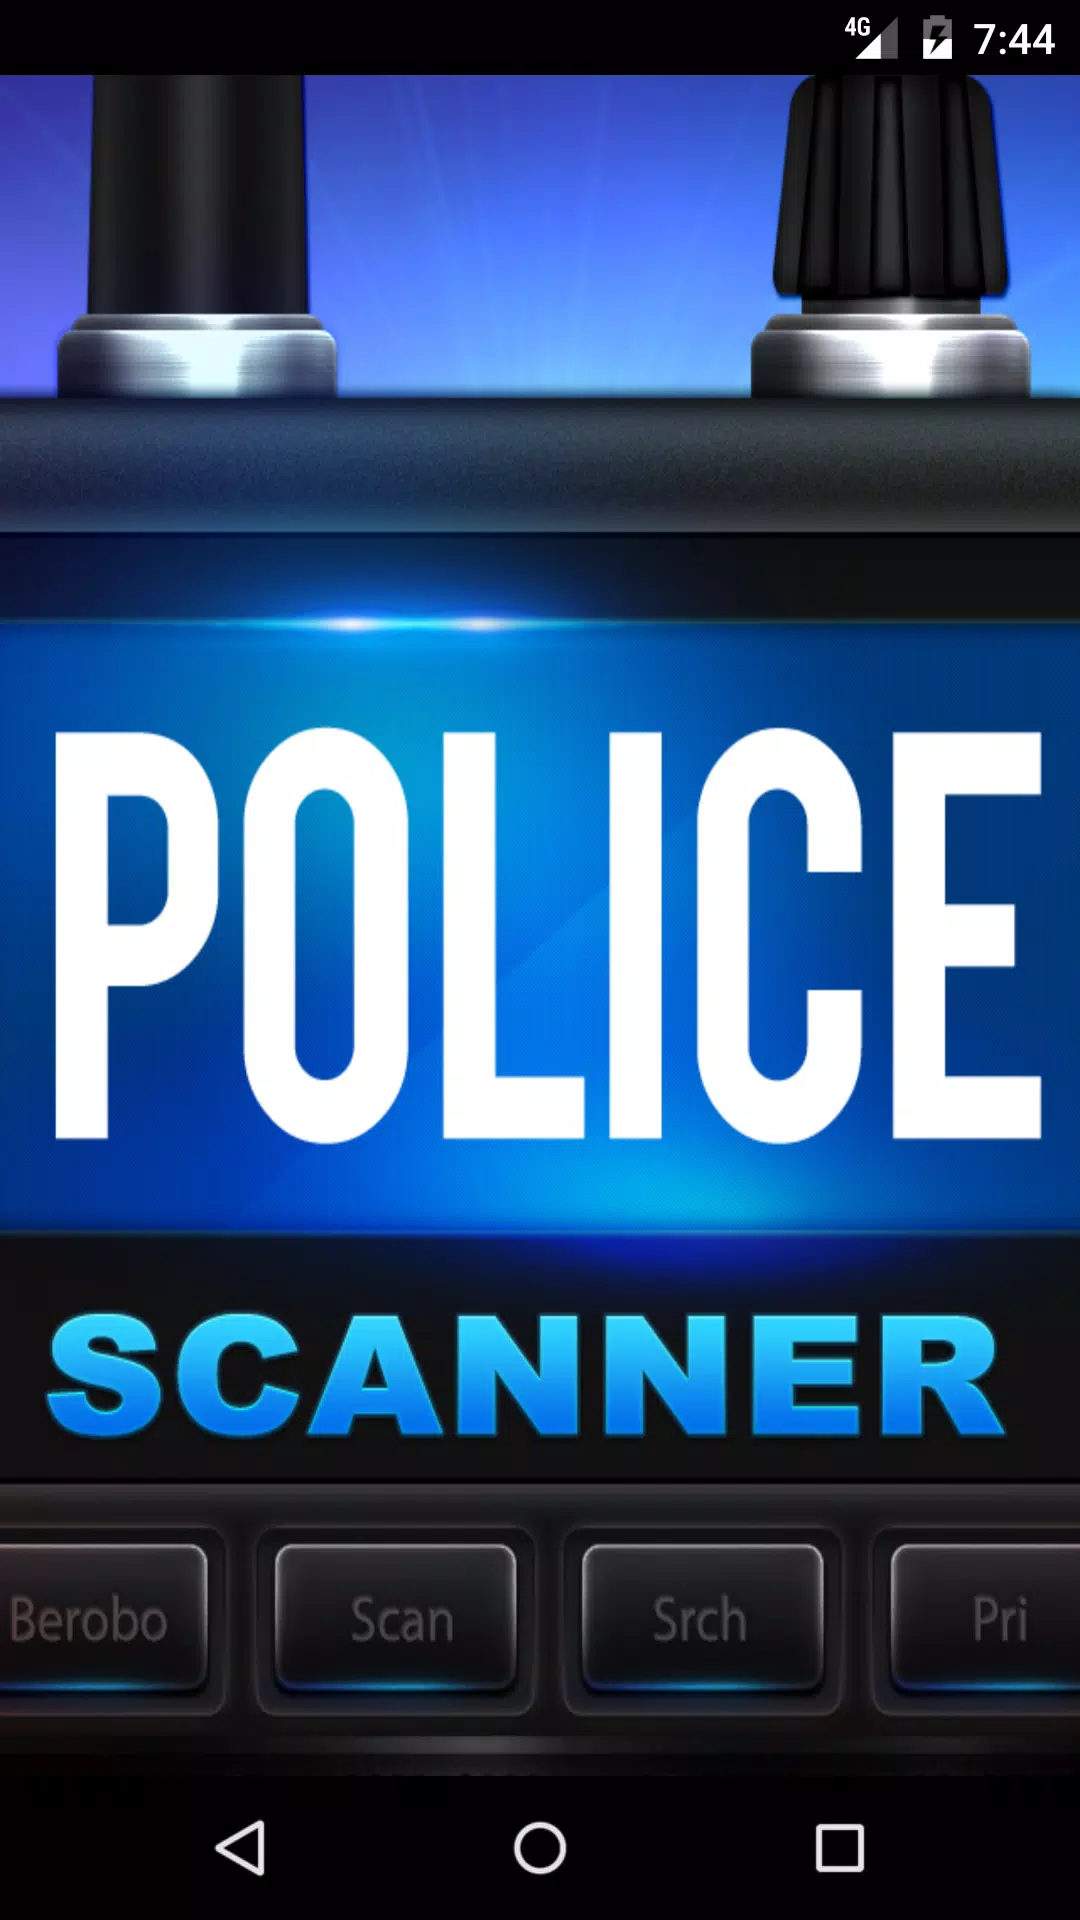 Police Scanner X APK pour Android Télécharger